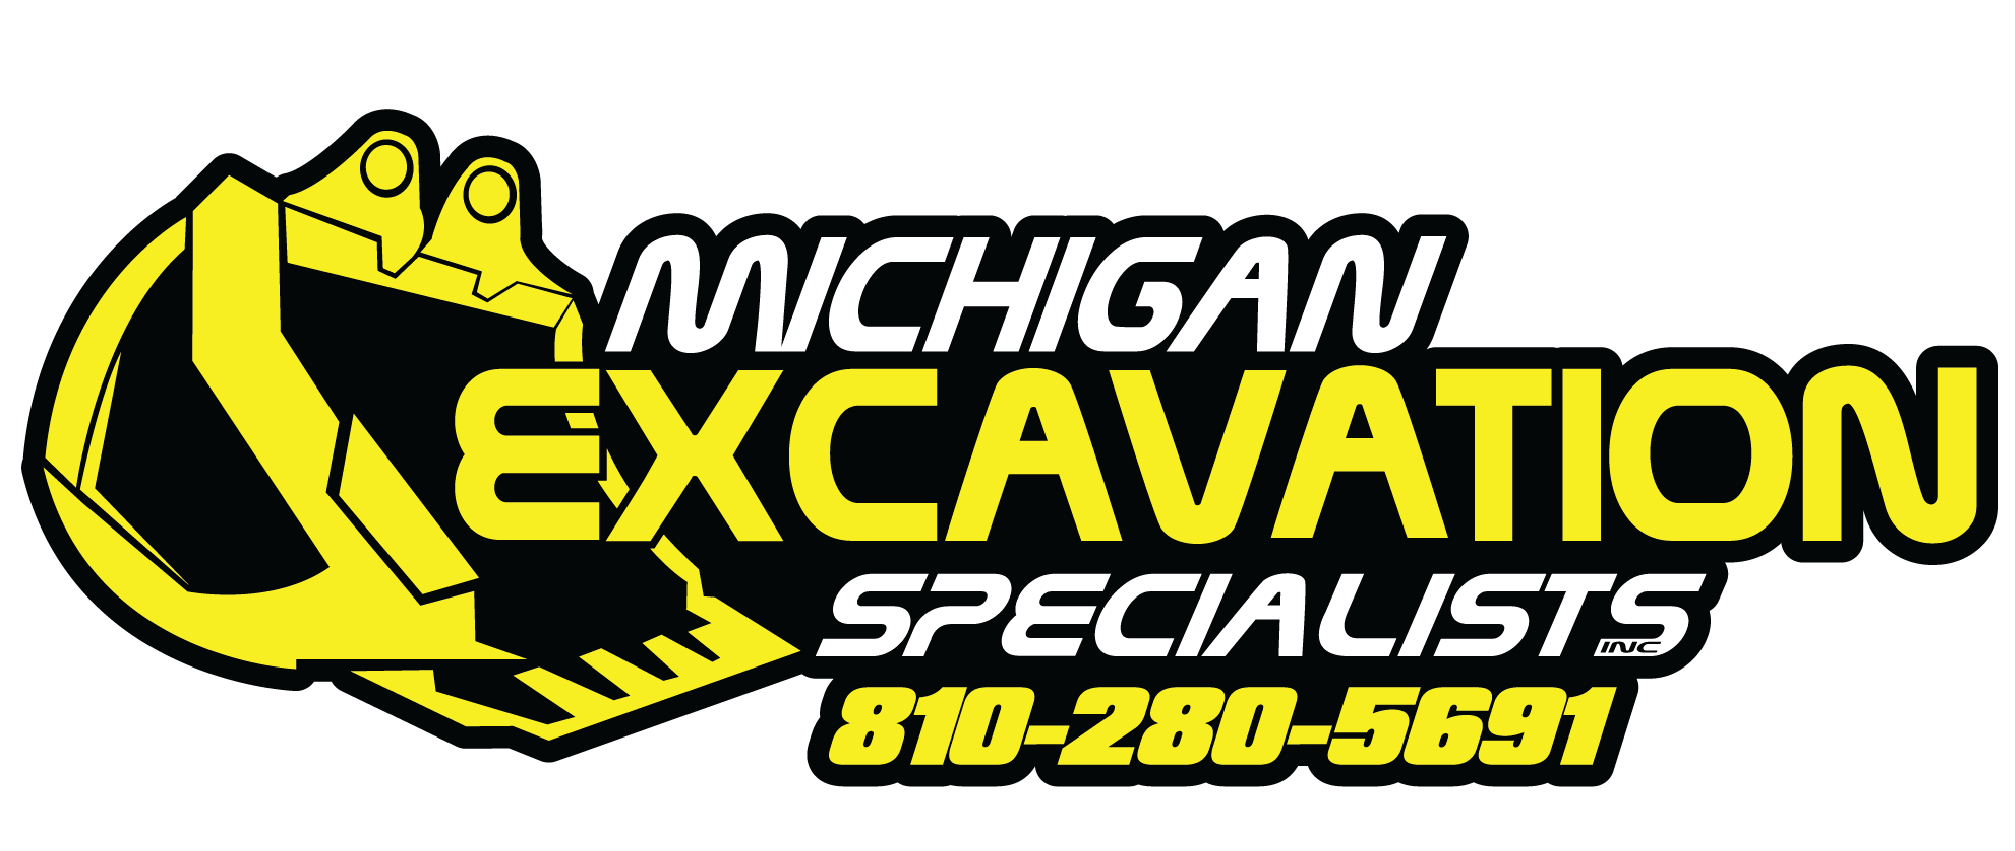 Michigan Excavating Specialists